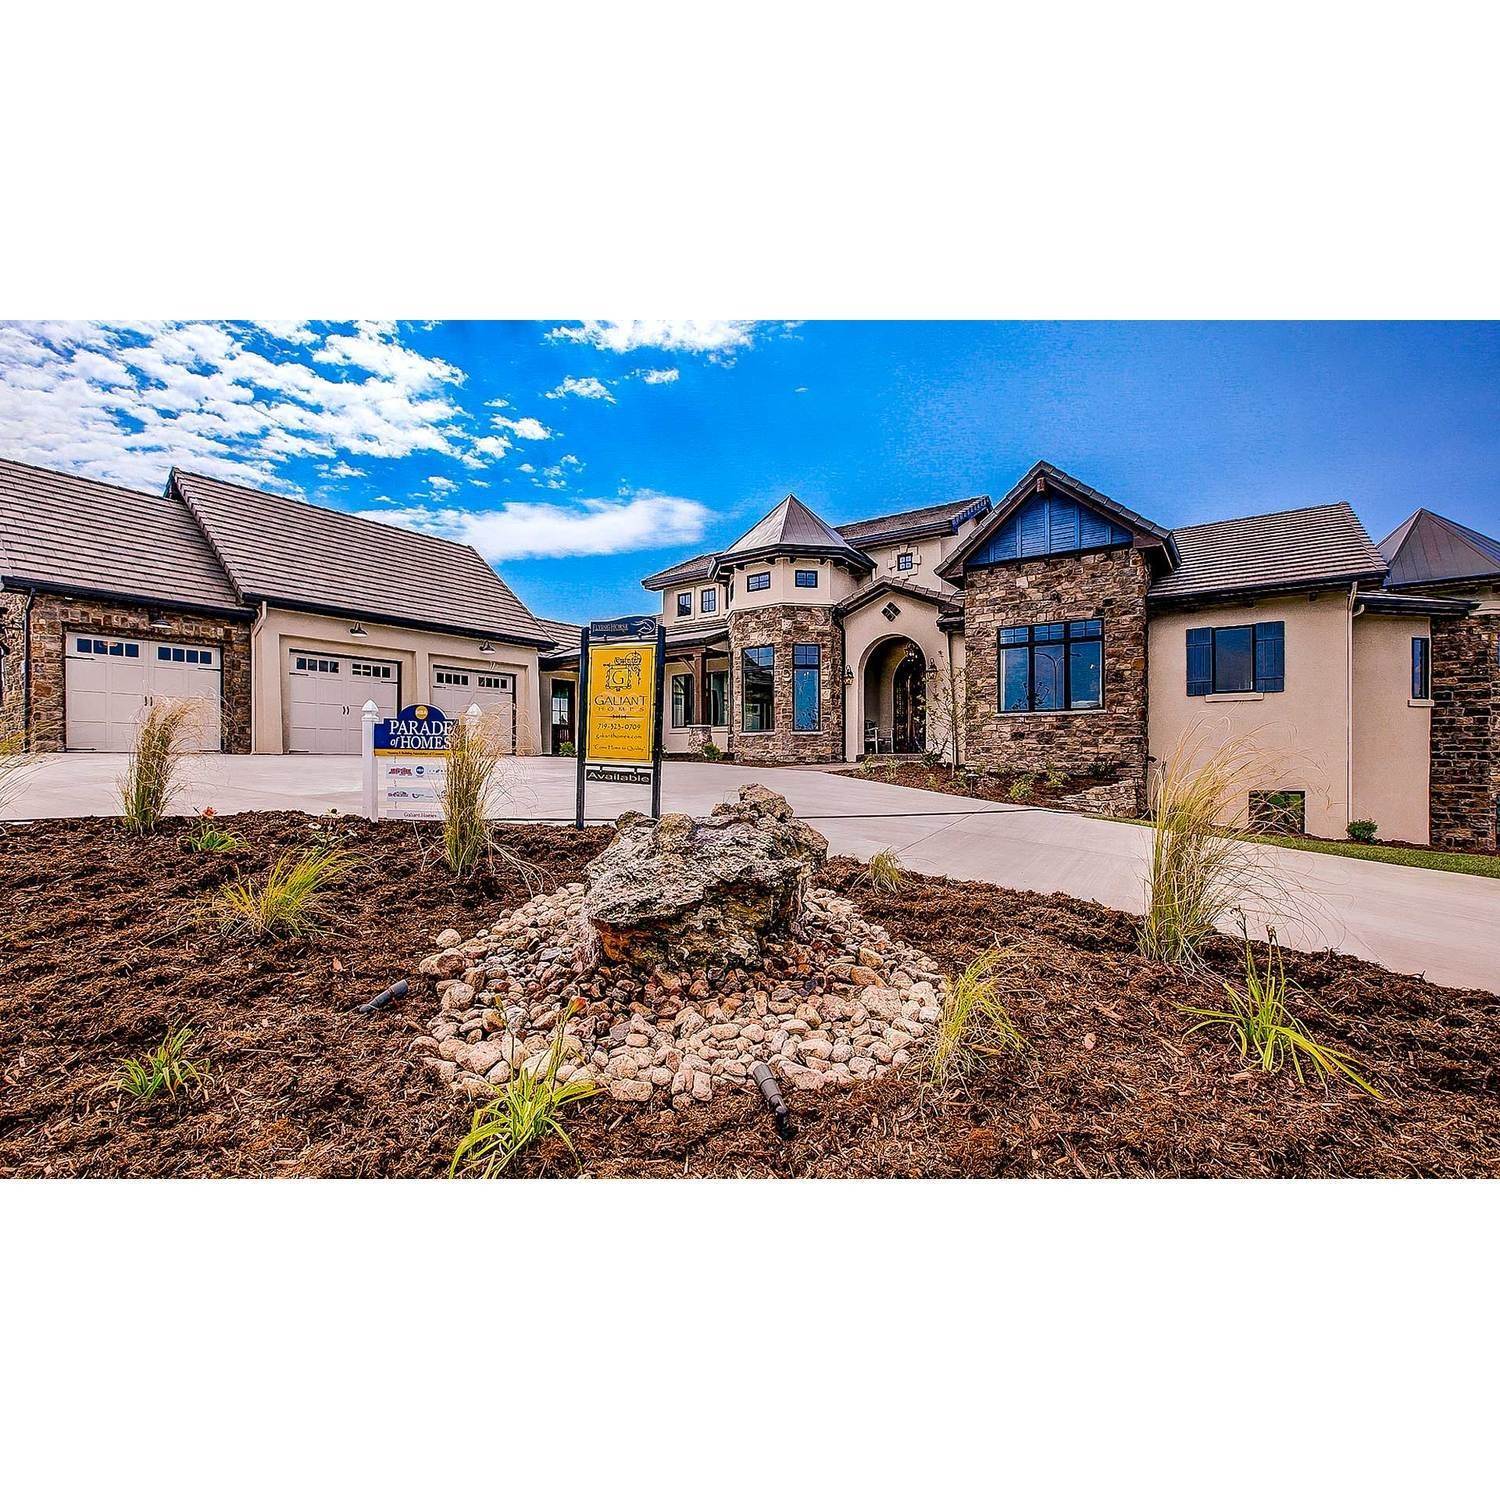 19. Galiant Homes κτίριο σε 4783 Farmingdale Dr, Colorado Springs, CO 80918